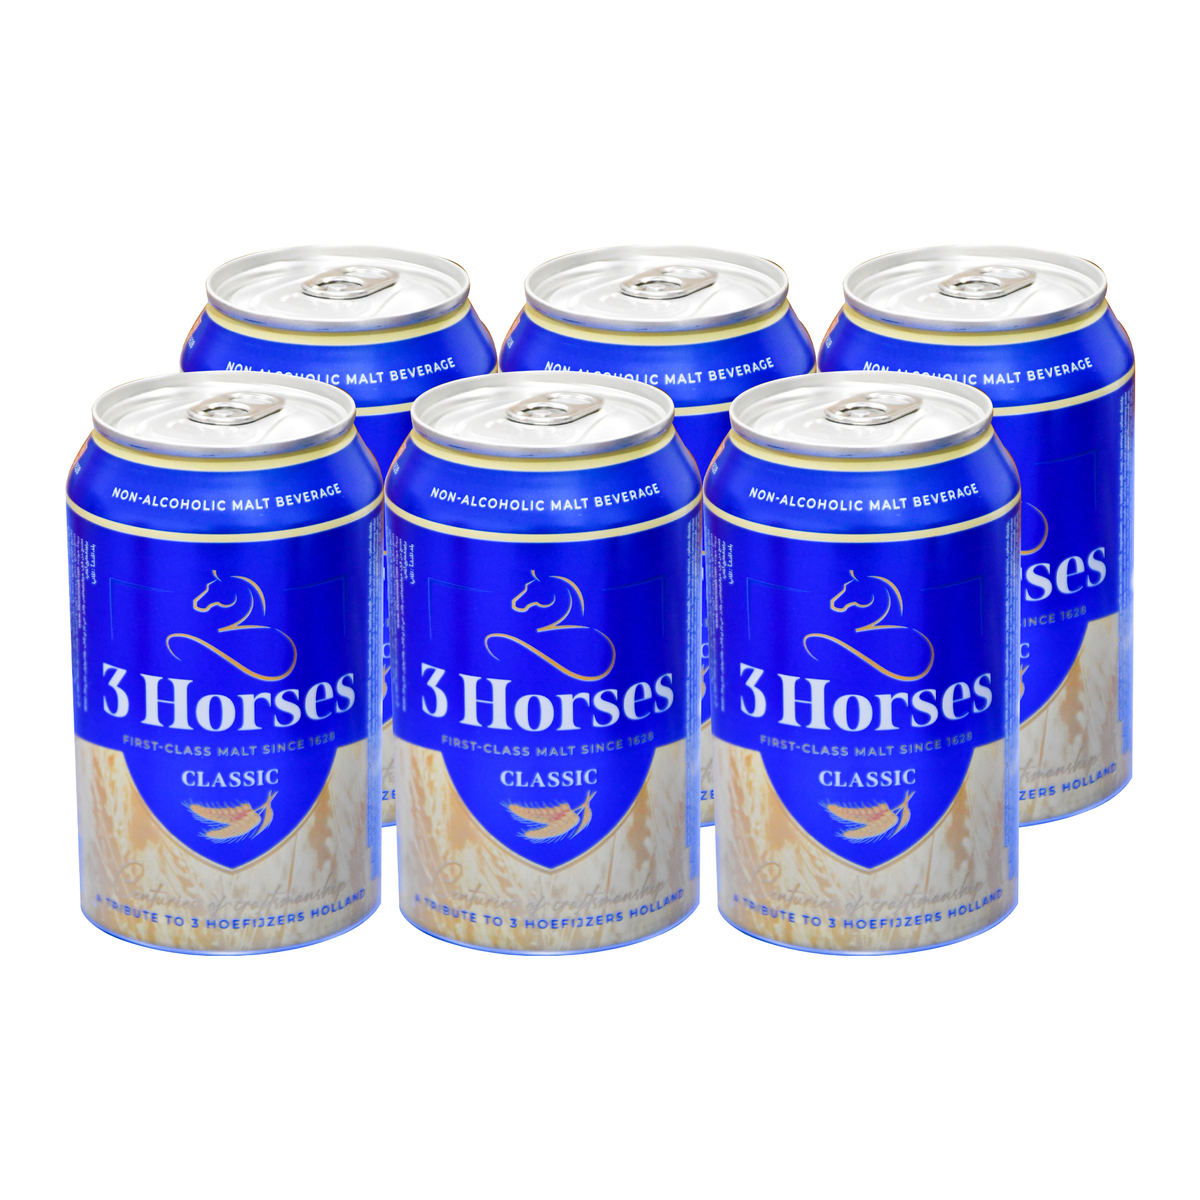 3 Horses Non-Alcoholic Malt Beverages 330ml x 6 Pieces